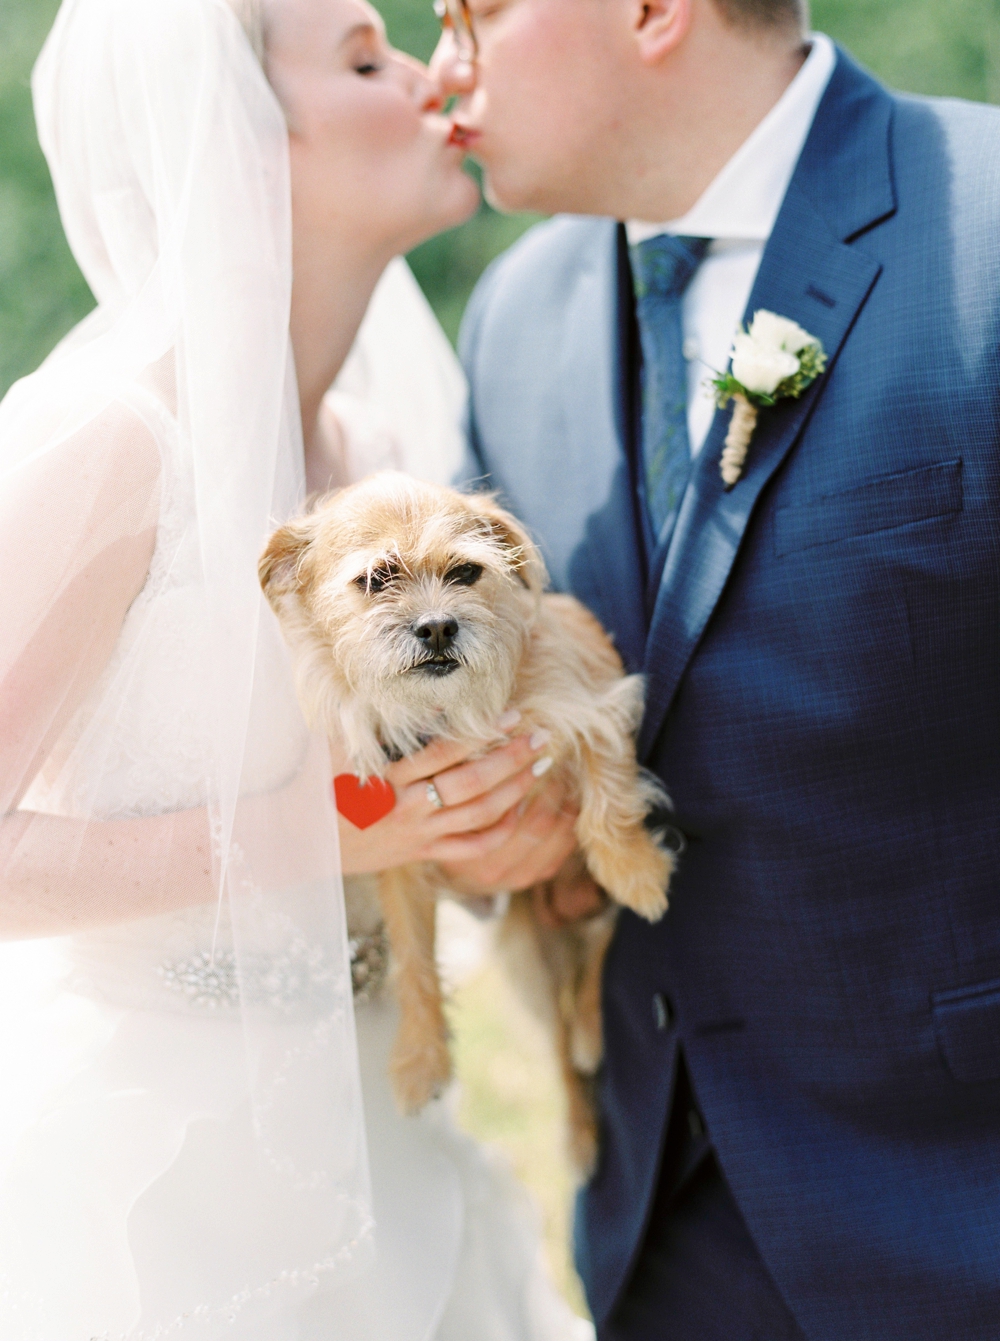 Calgary wedding photographers | The lake house wedding | Family formals | Justine Milton Photography